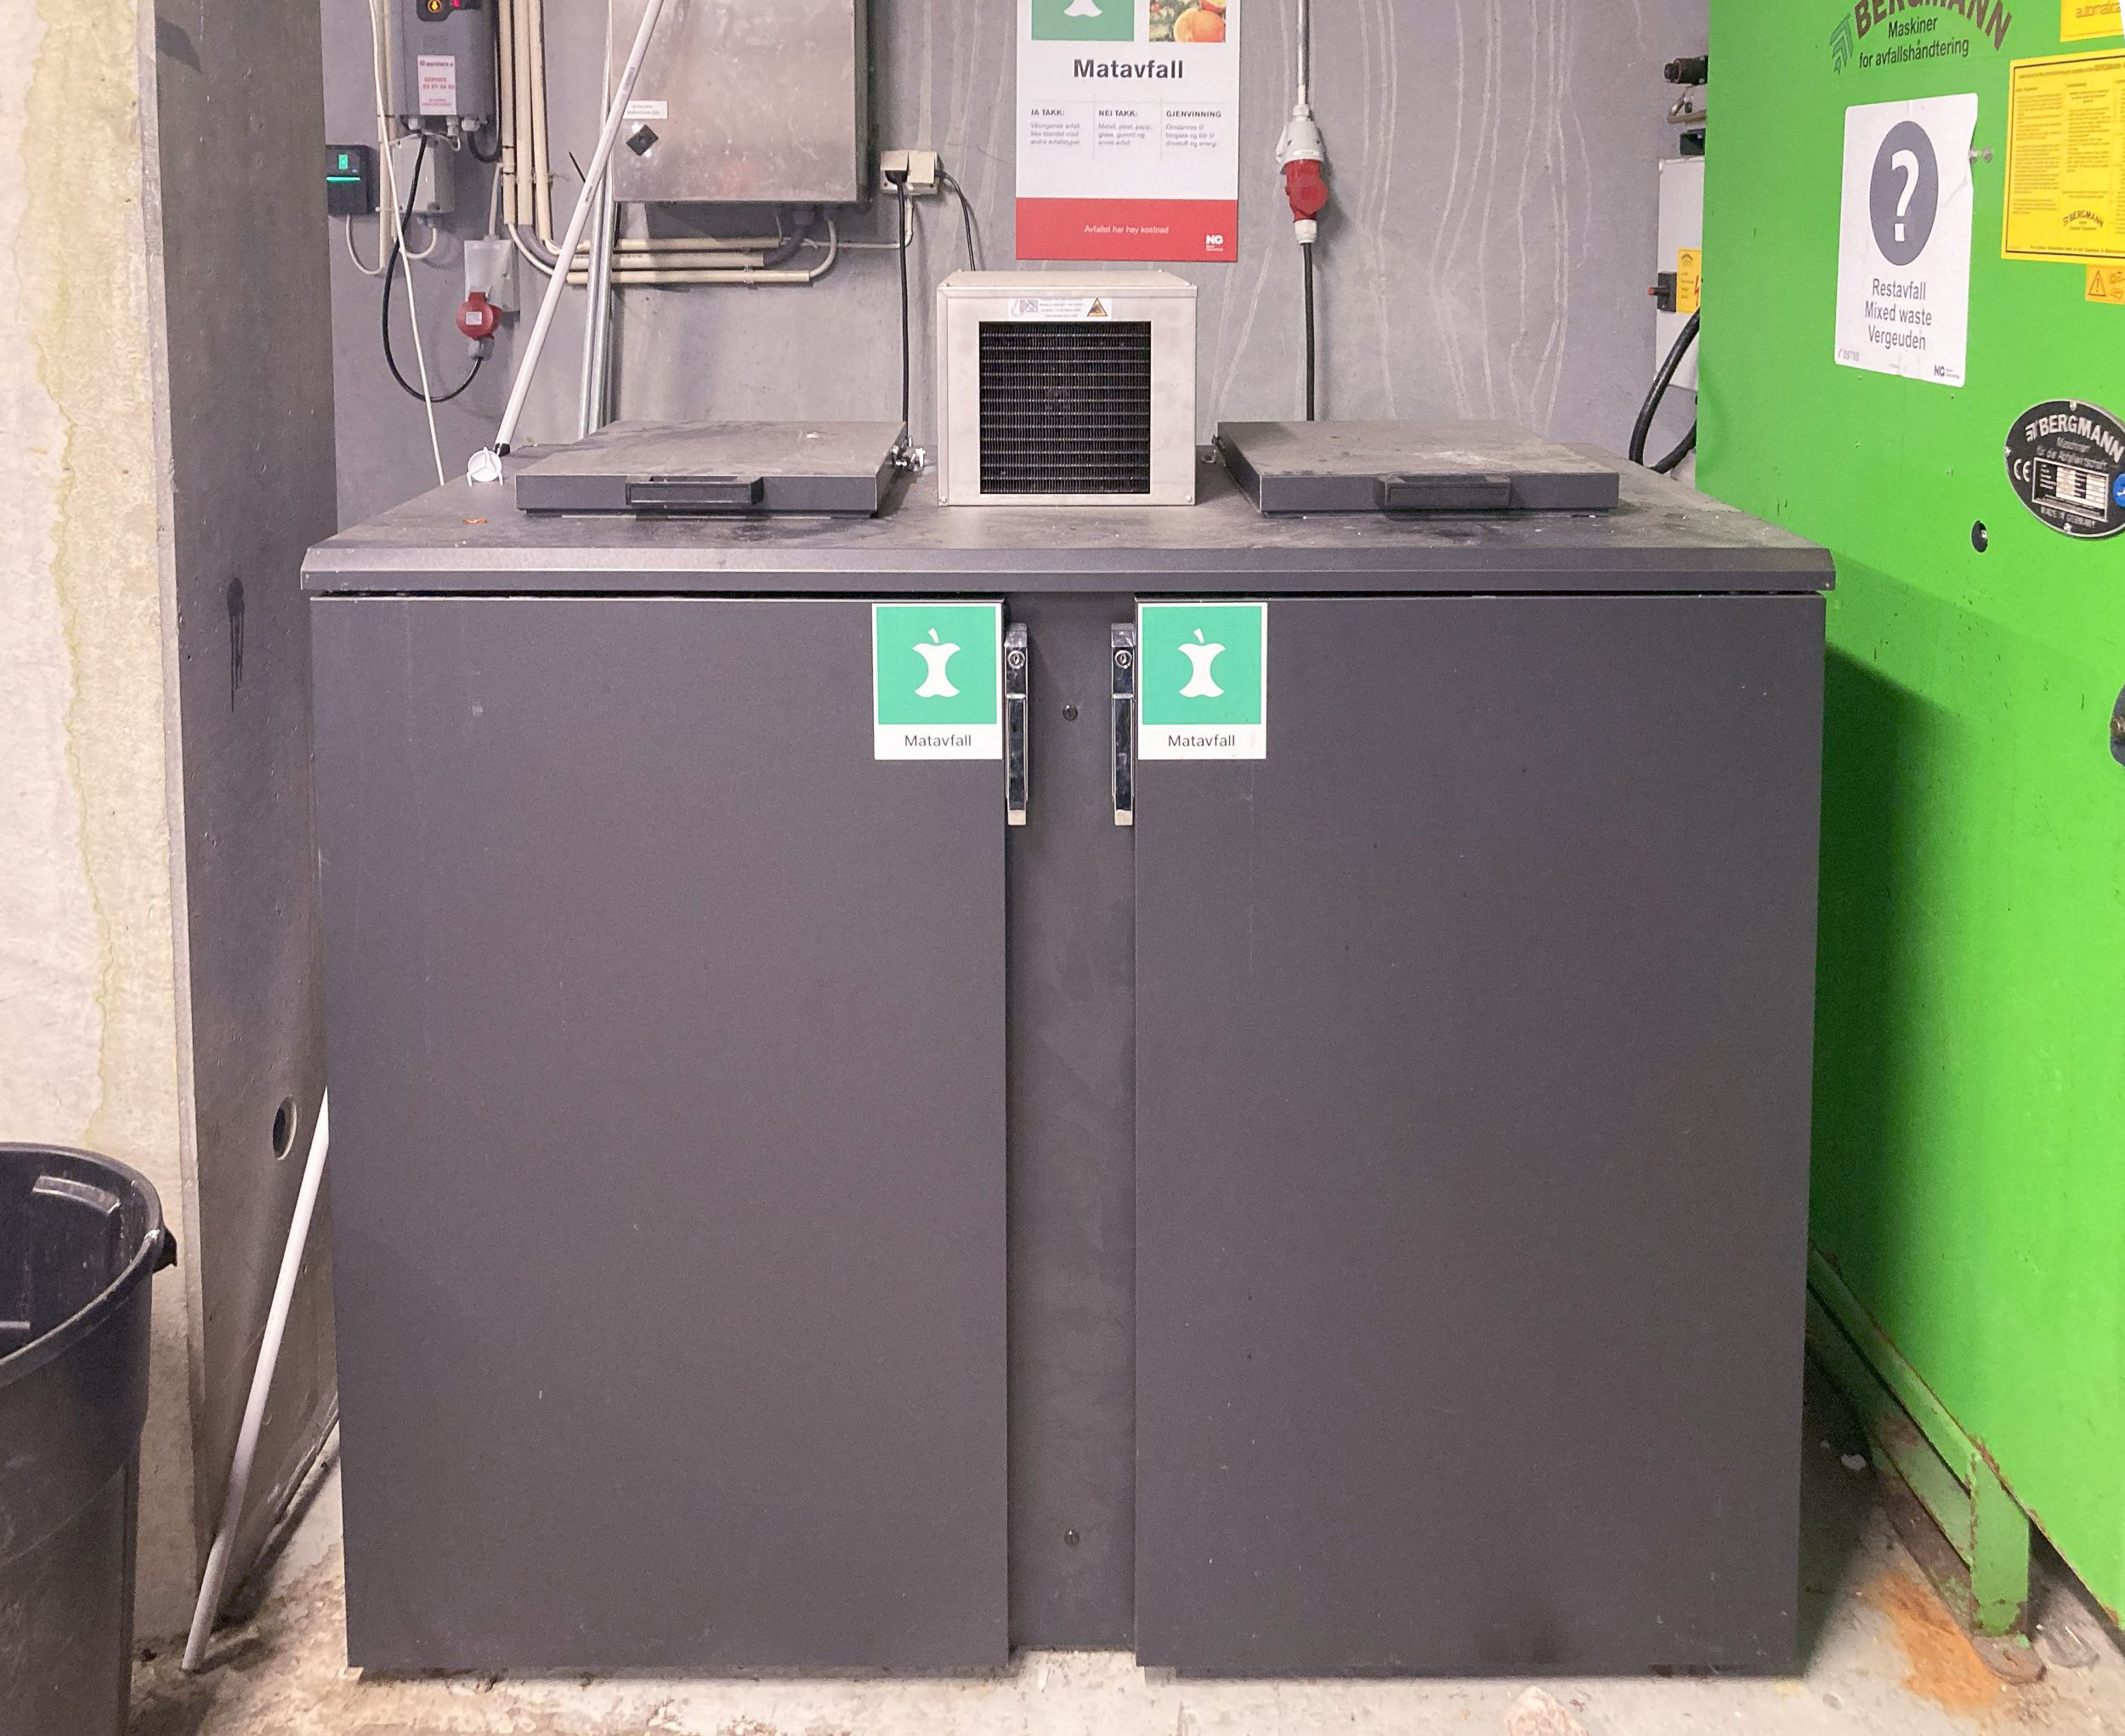 Refrigeration for compostable waste at Bislett Stadium